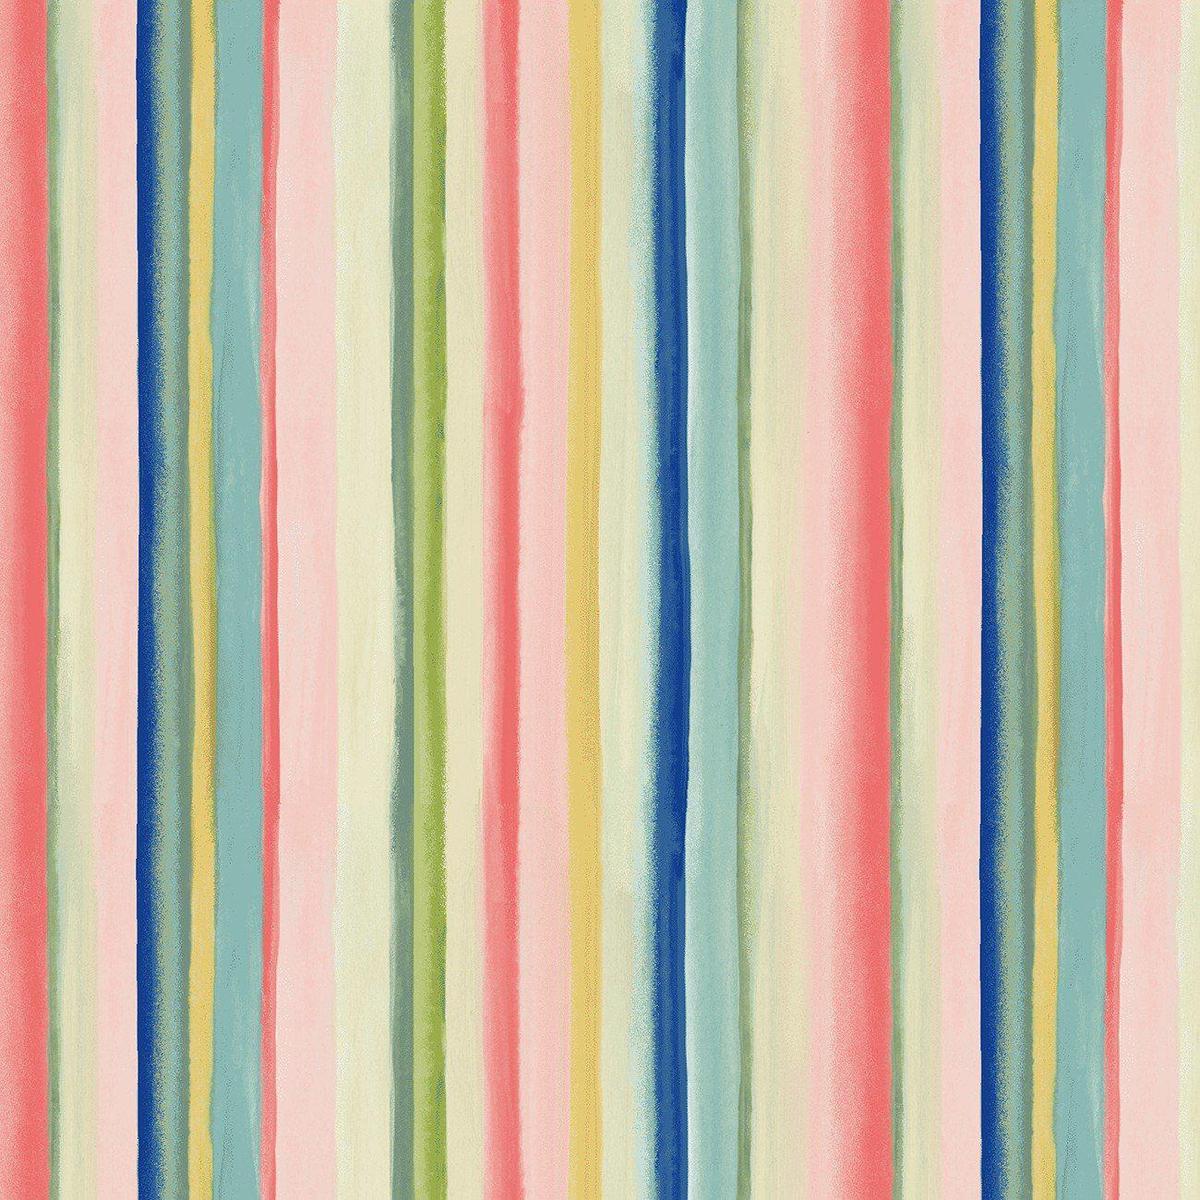 01 Light Pink Chalk Texture (9488) - KK Fabrics